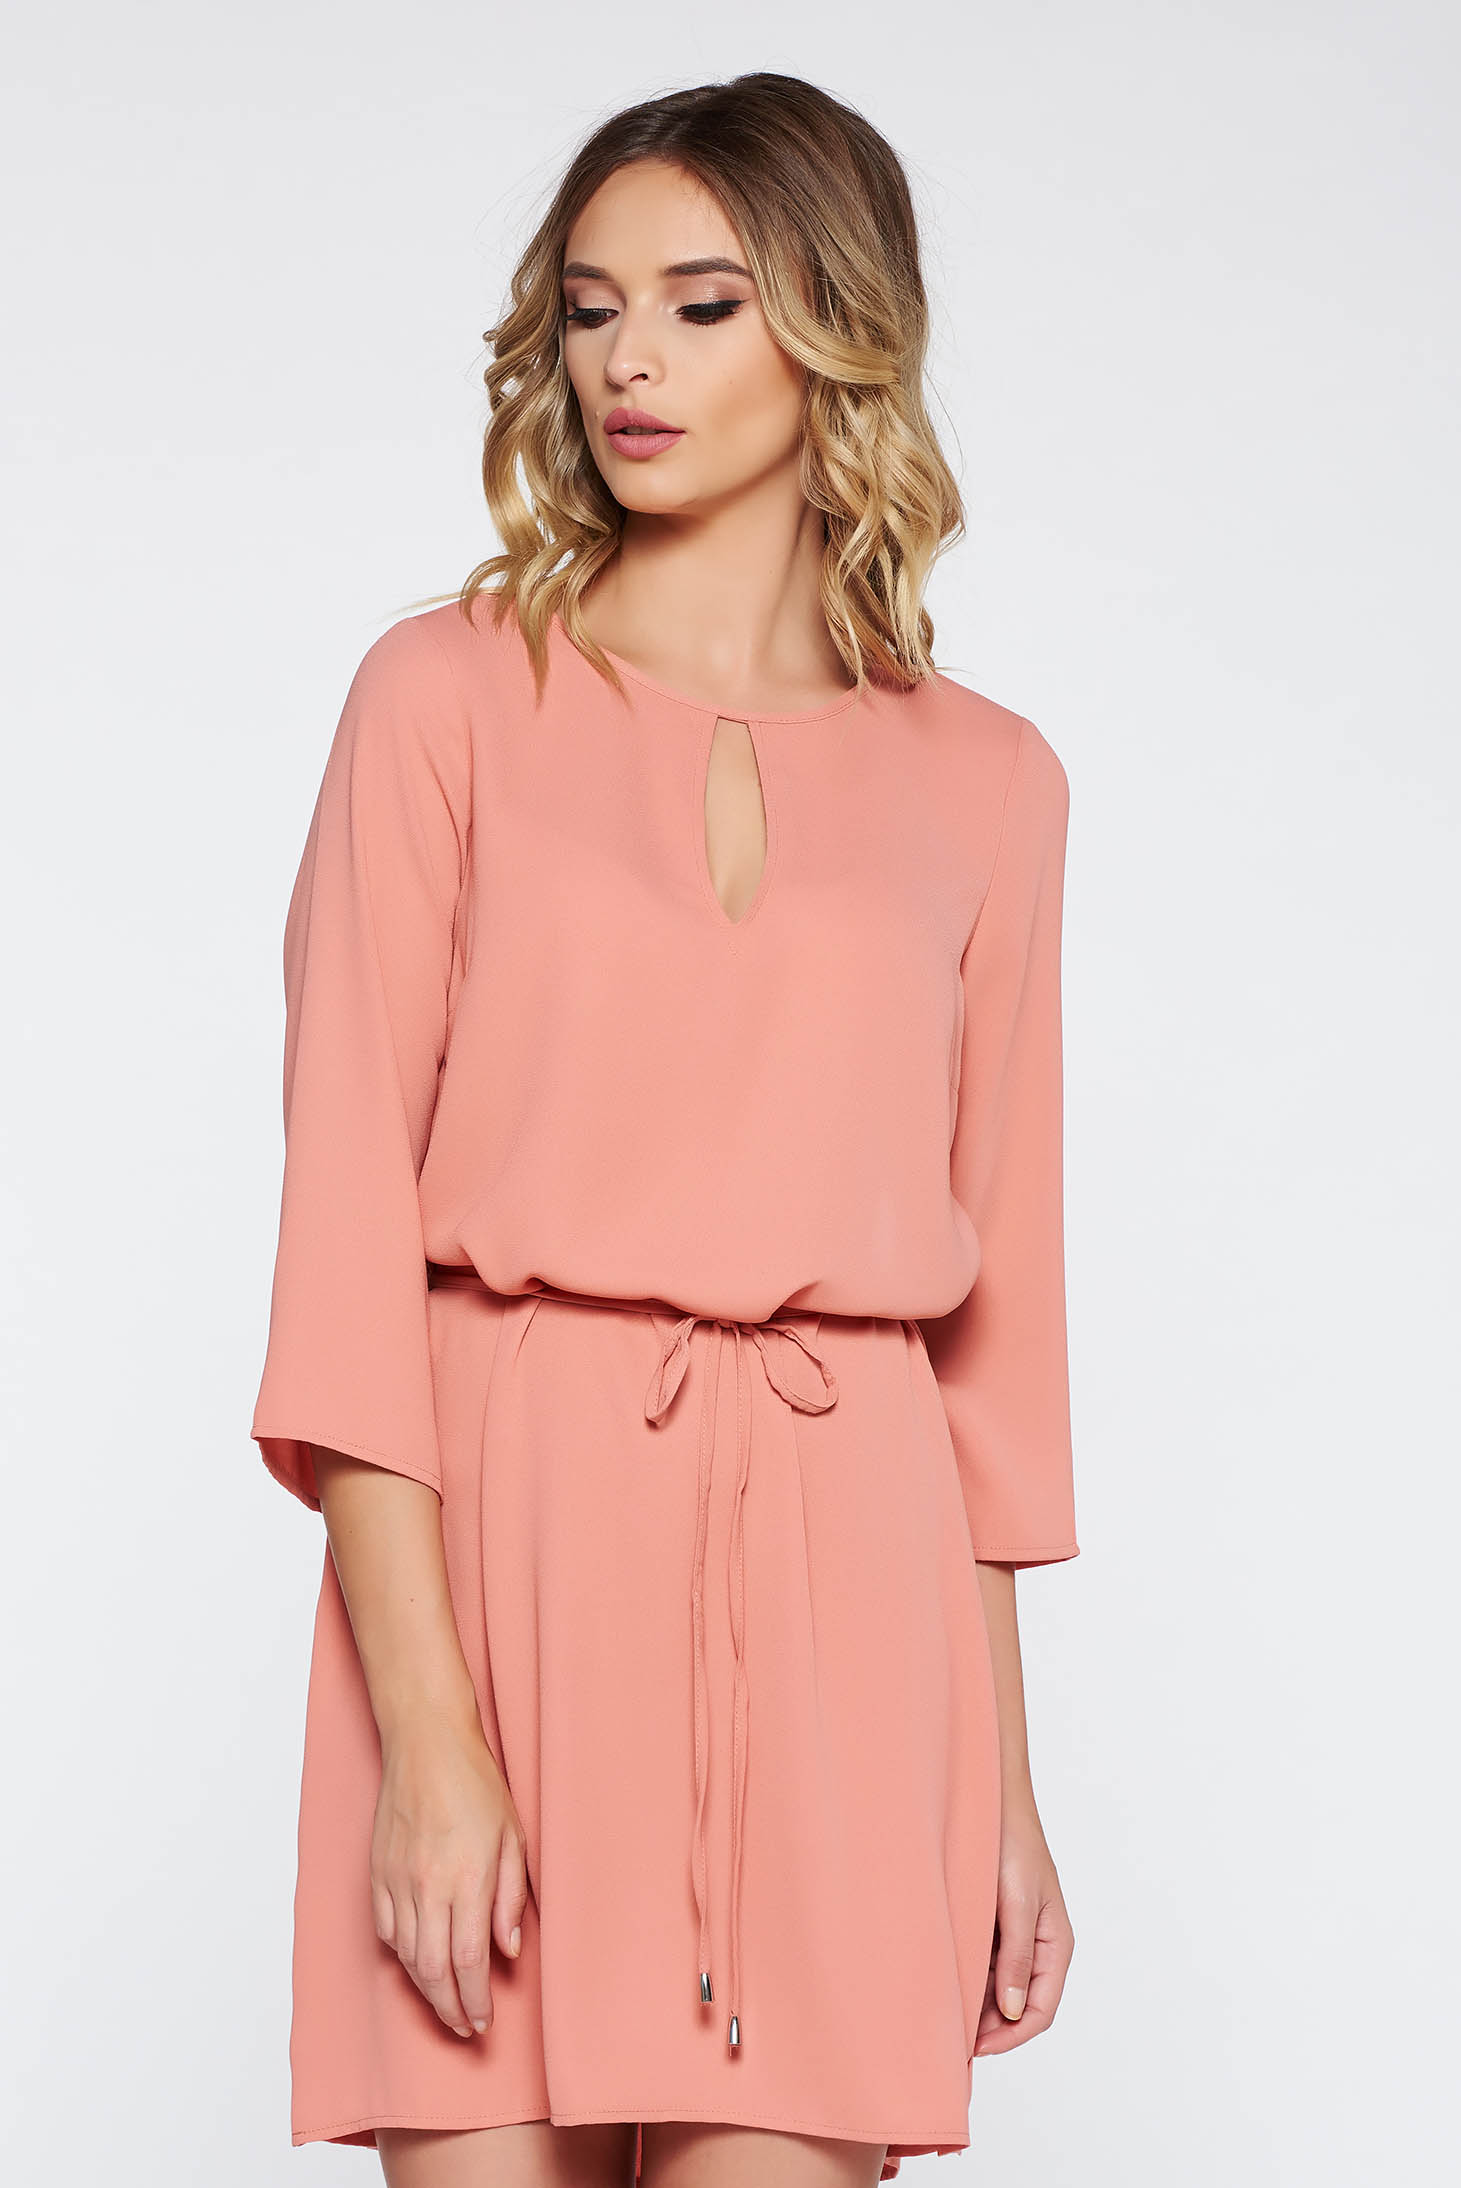 Peach color dress , casual wear, simple dress